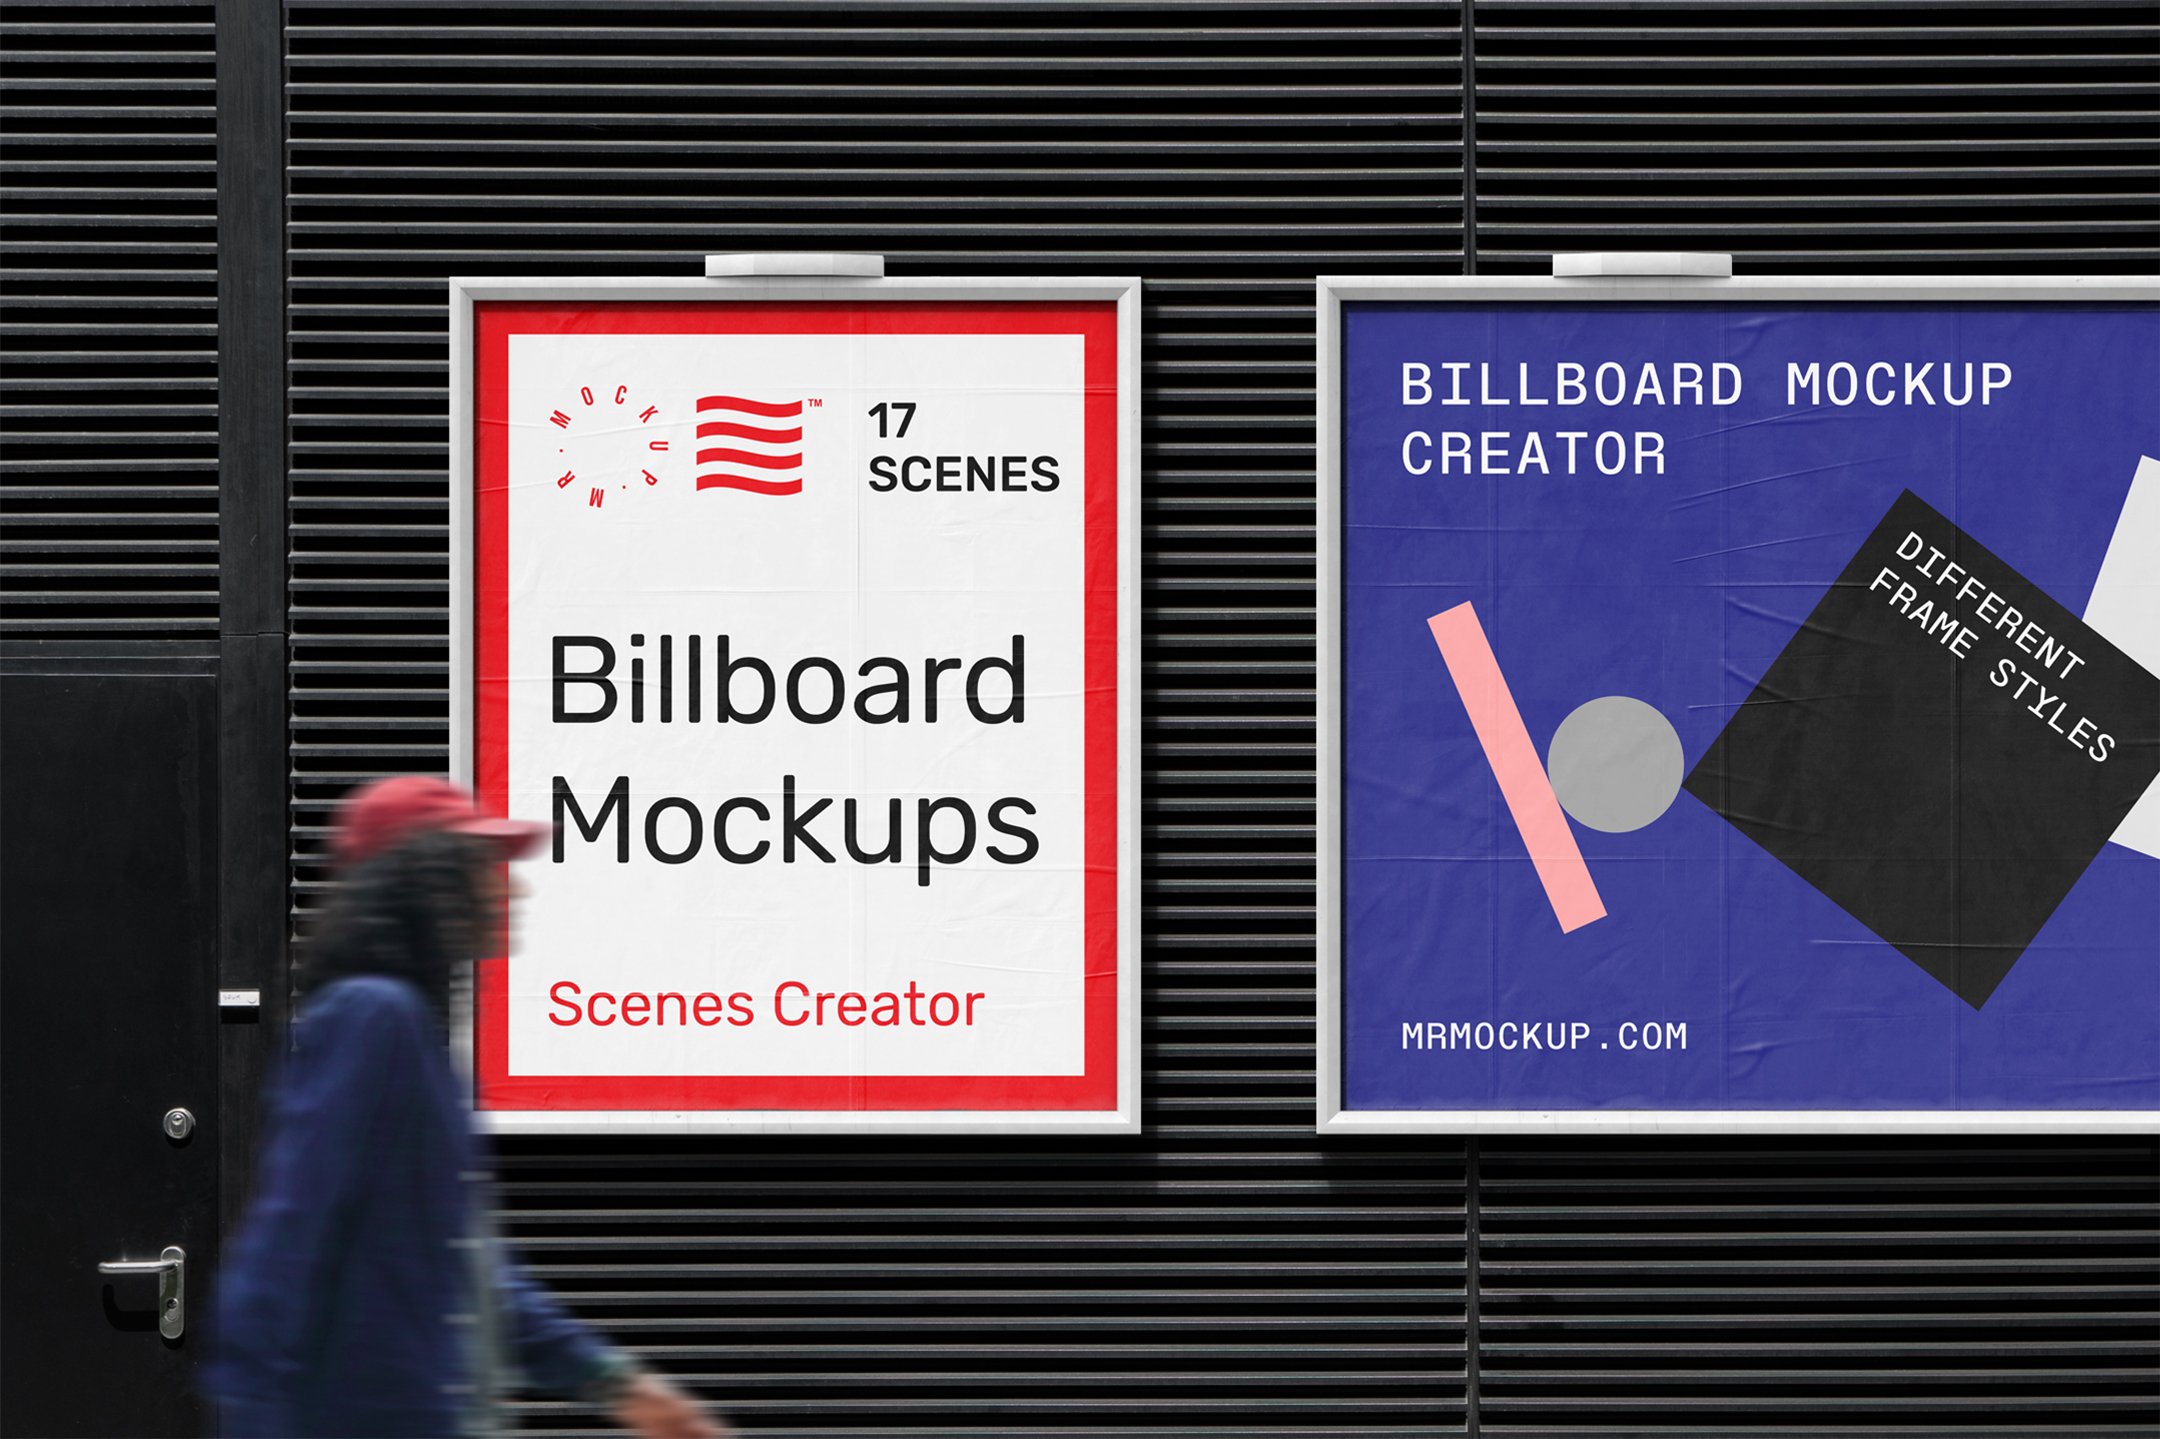 Billboard Mockup - Scenes Creator cover image.